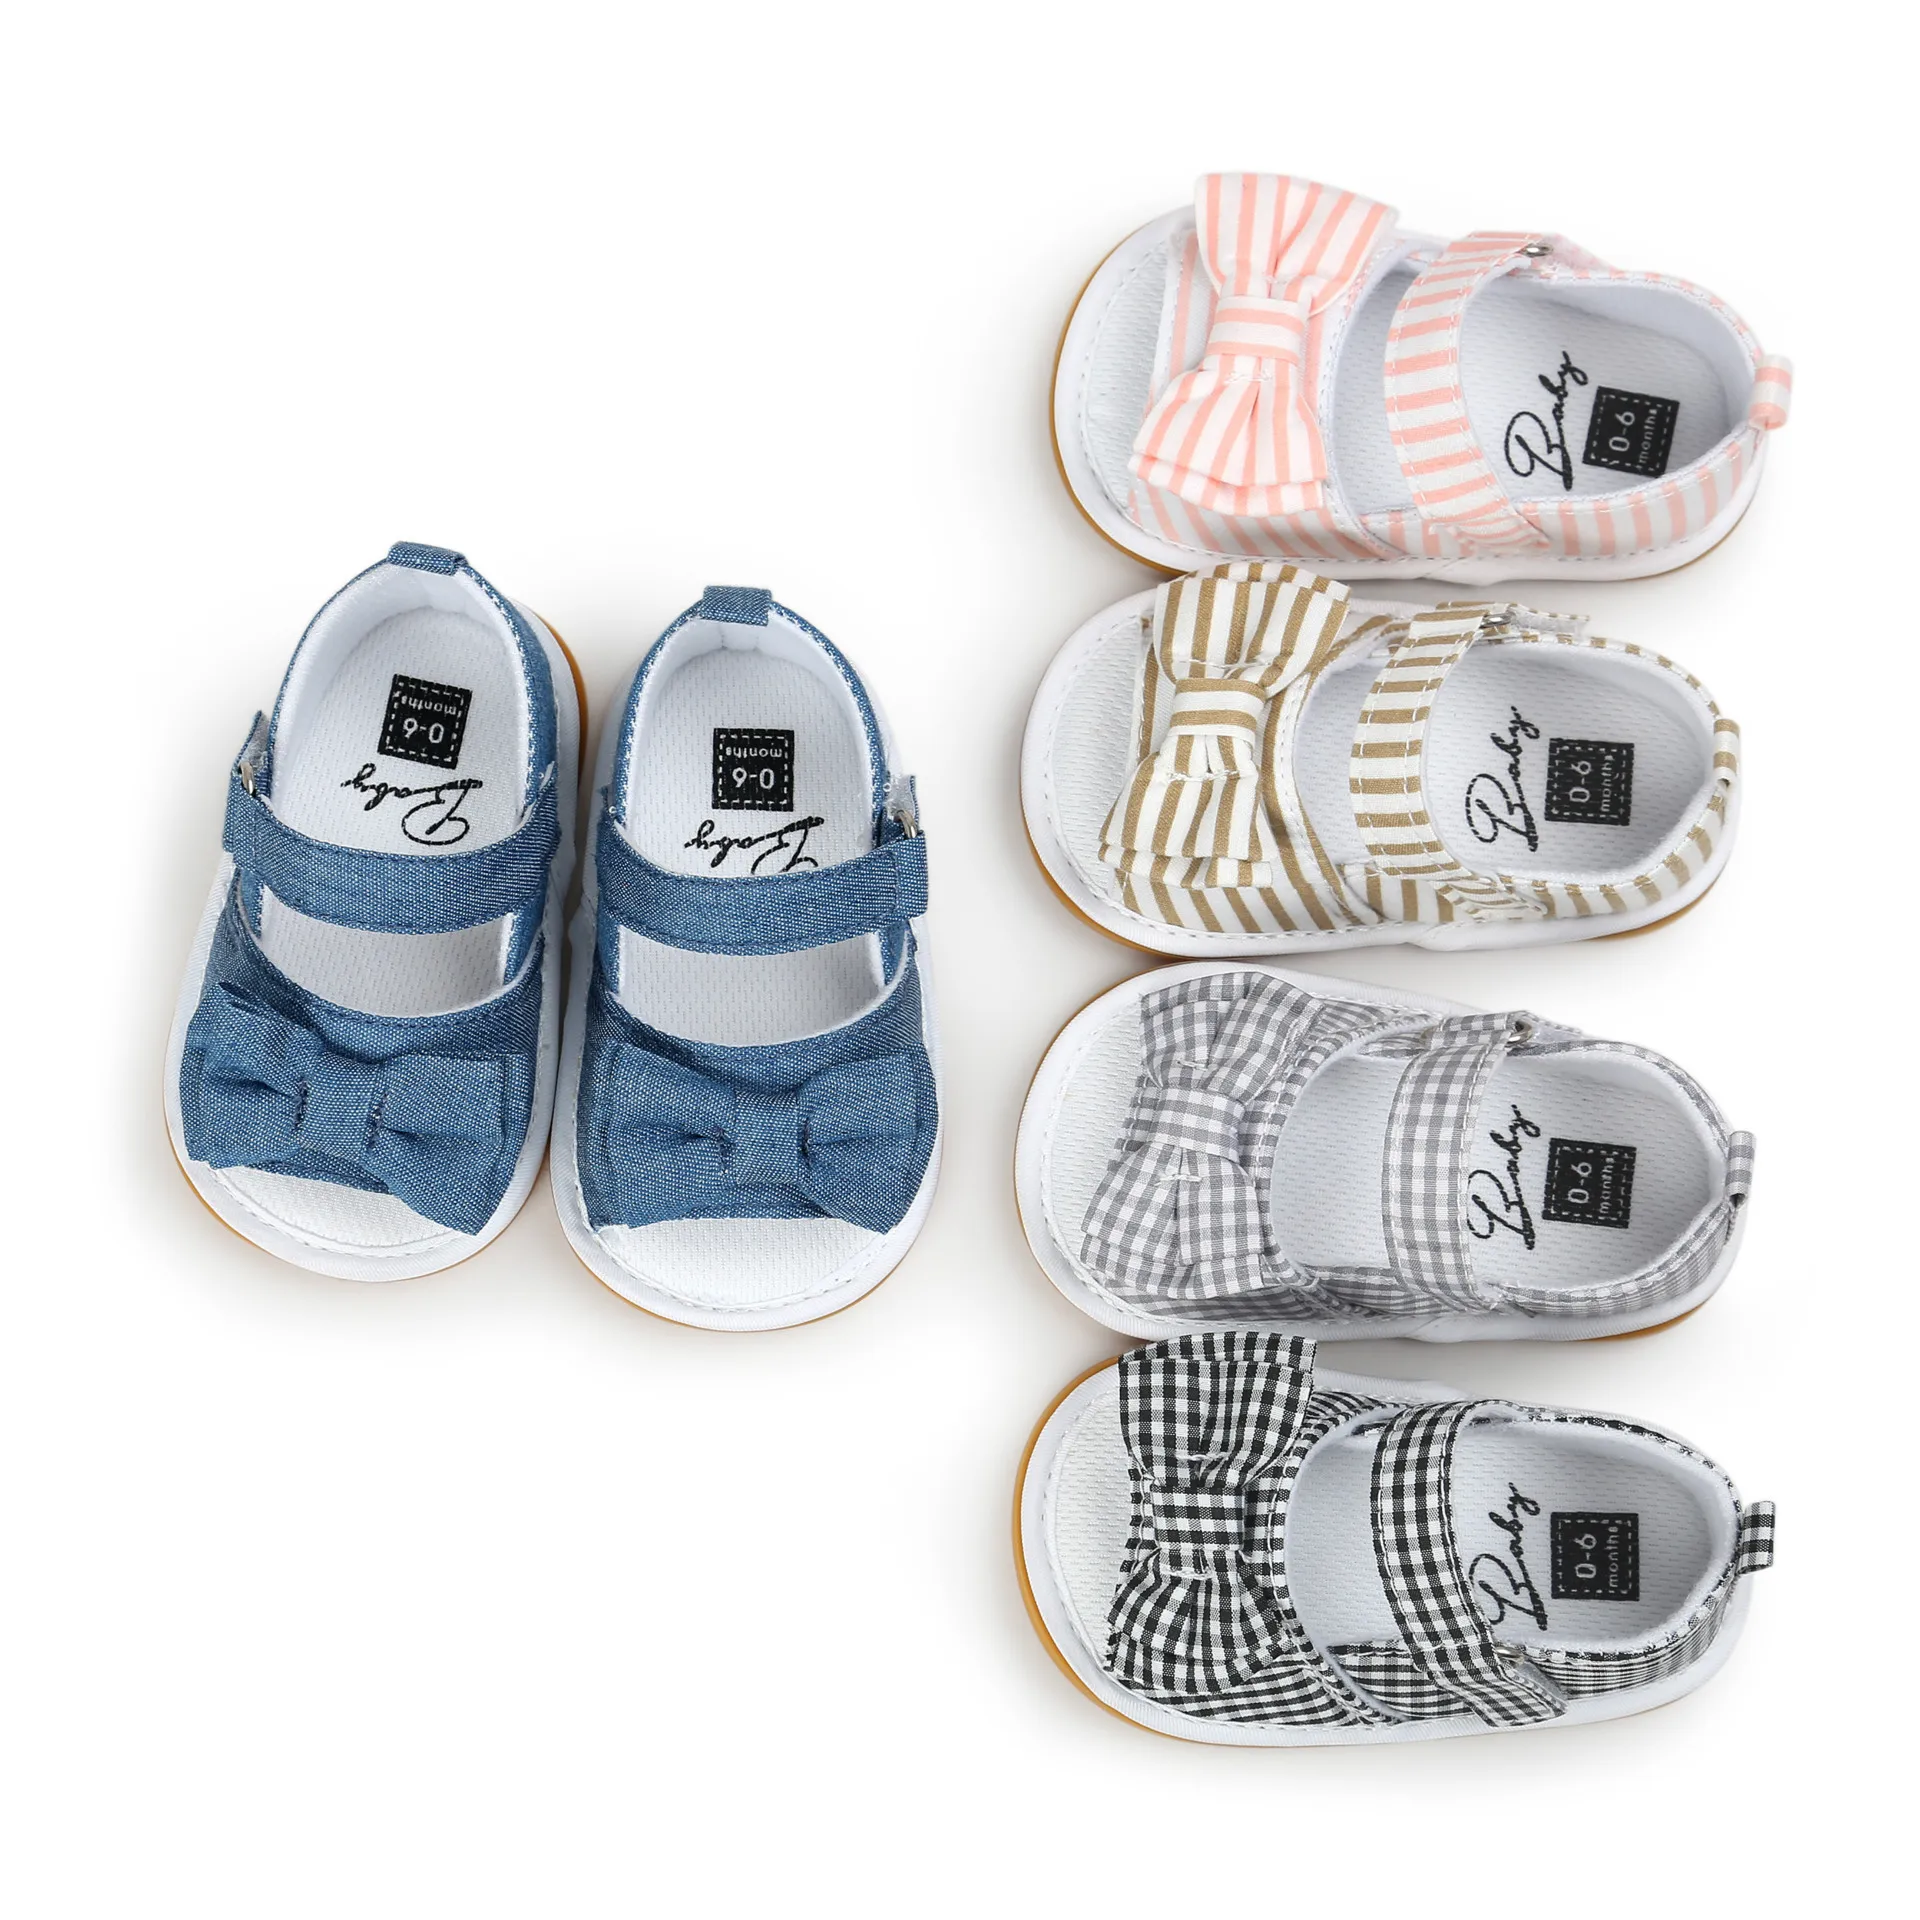 

6243 Newborn Infant Baby Girls Bowknot Rubber Sole Anti-slip Princess Shoes Summer Soft Sole Prewalker Sneakers Sandals Toddler